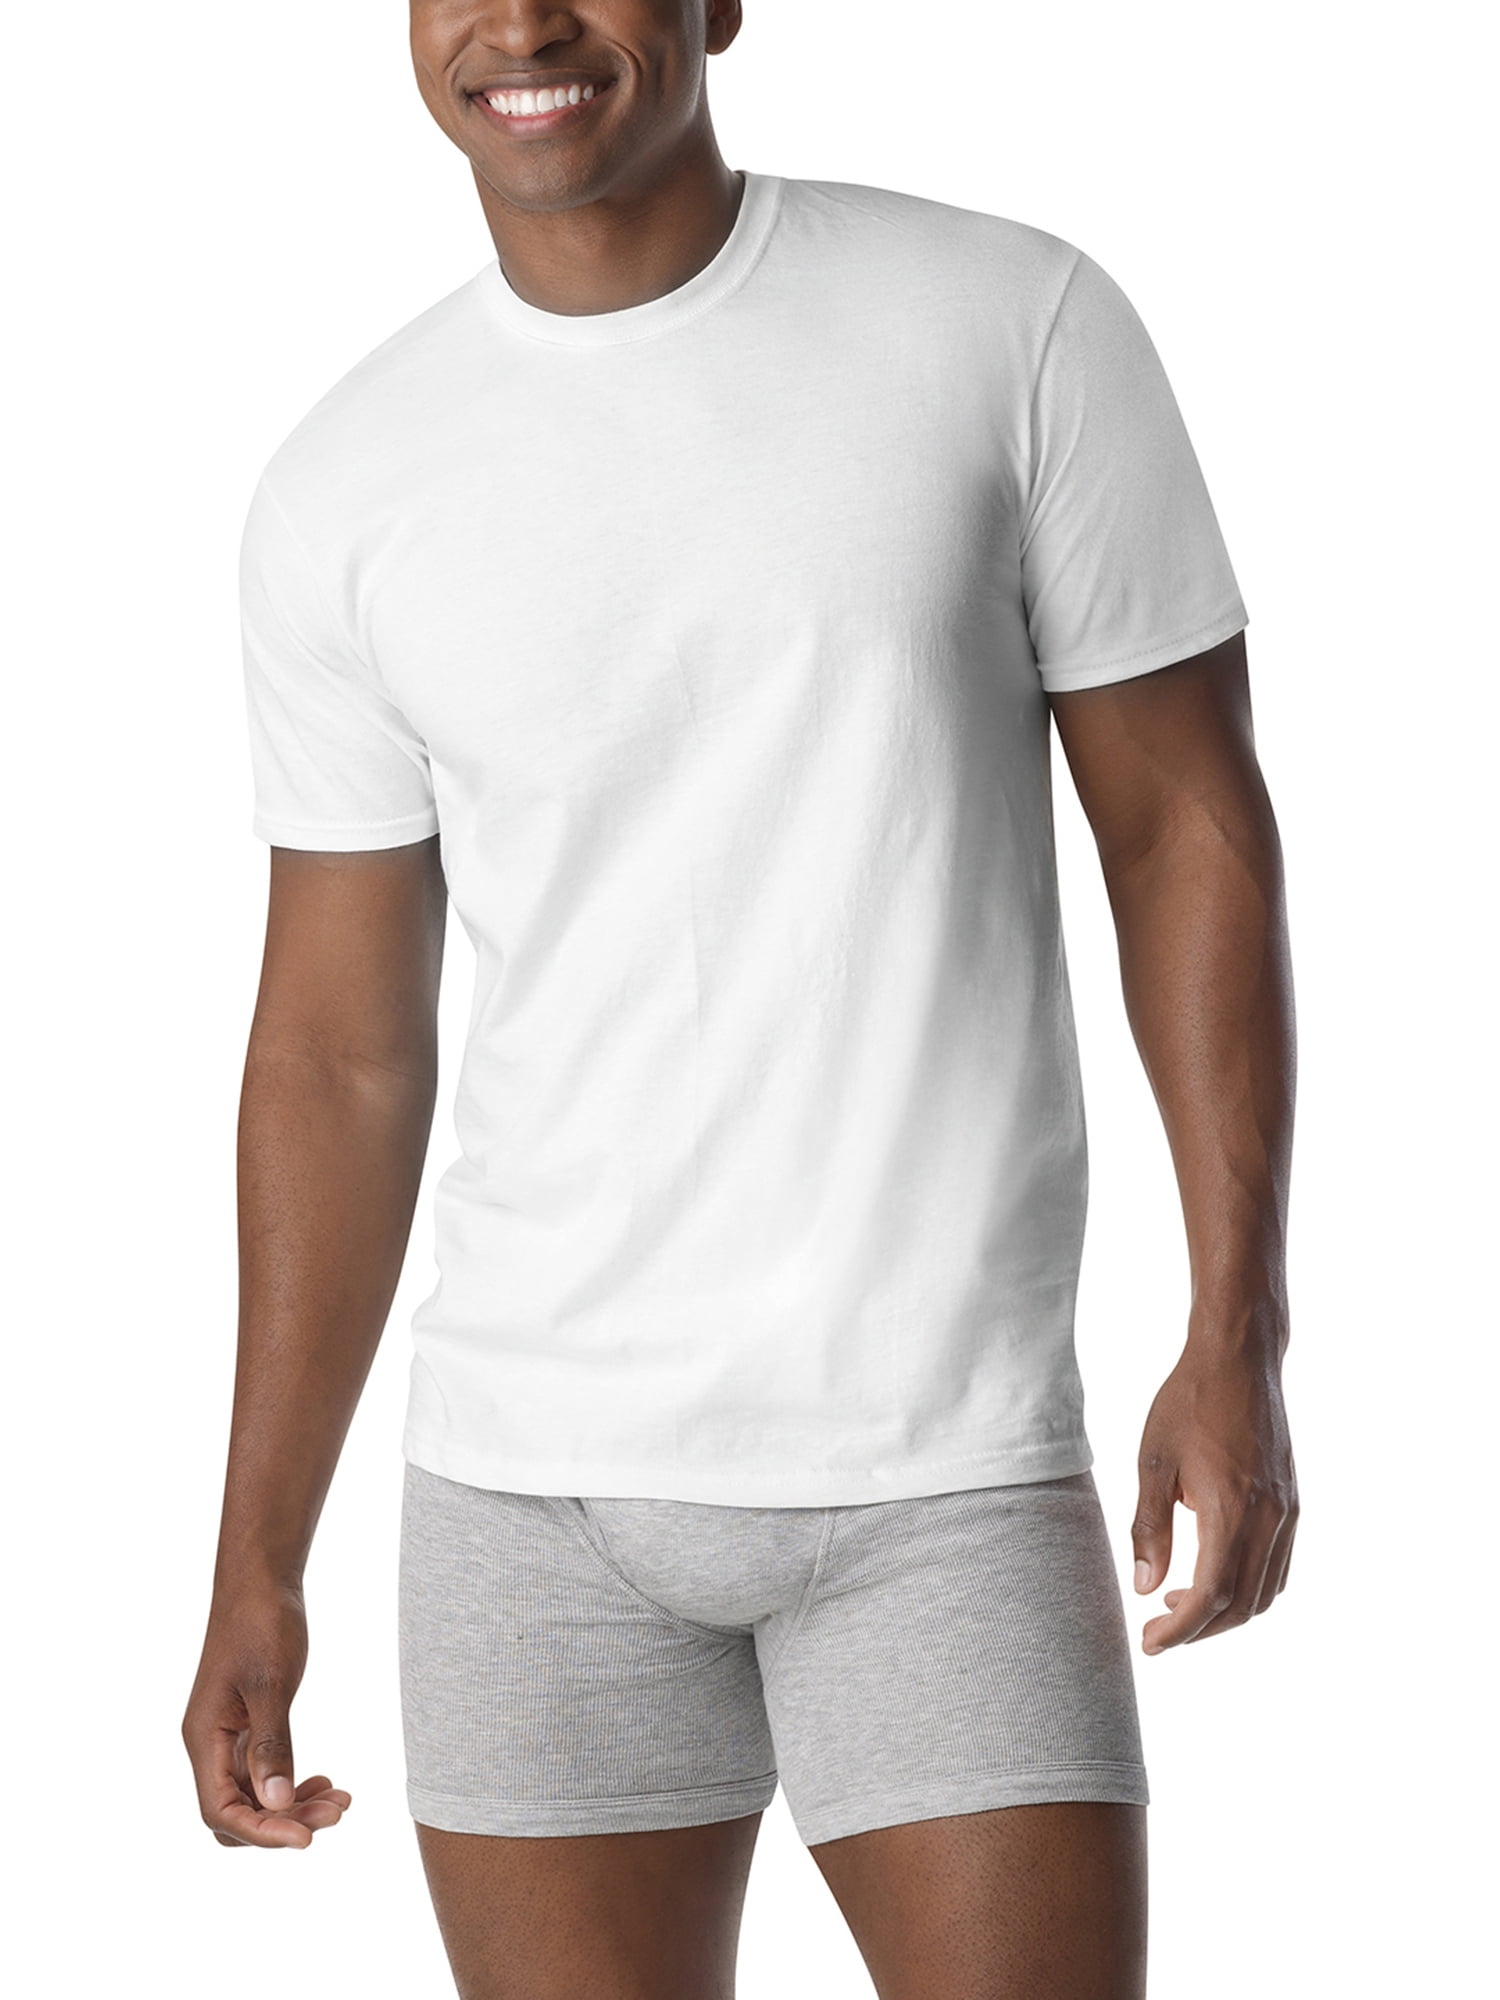 Men's Cool Dri T-Shirts, 6 Pack - Walmart.com